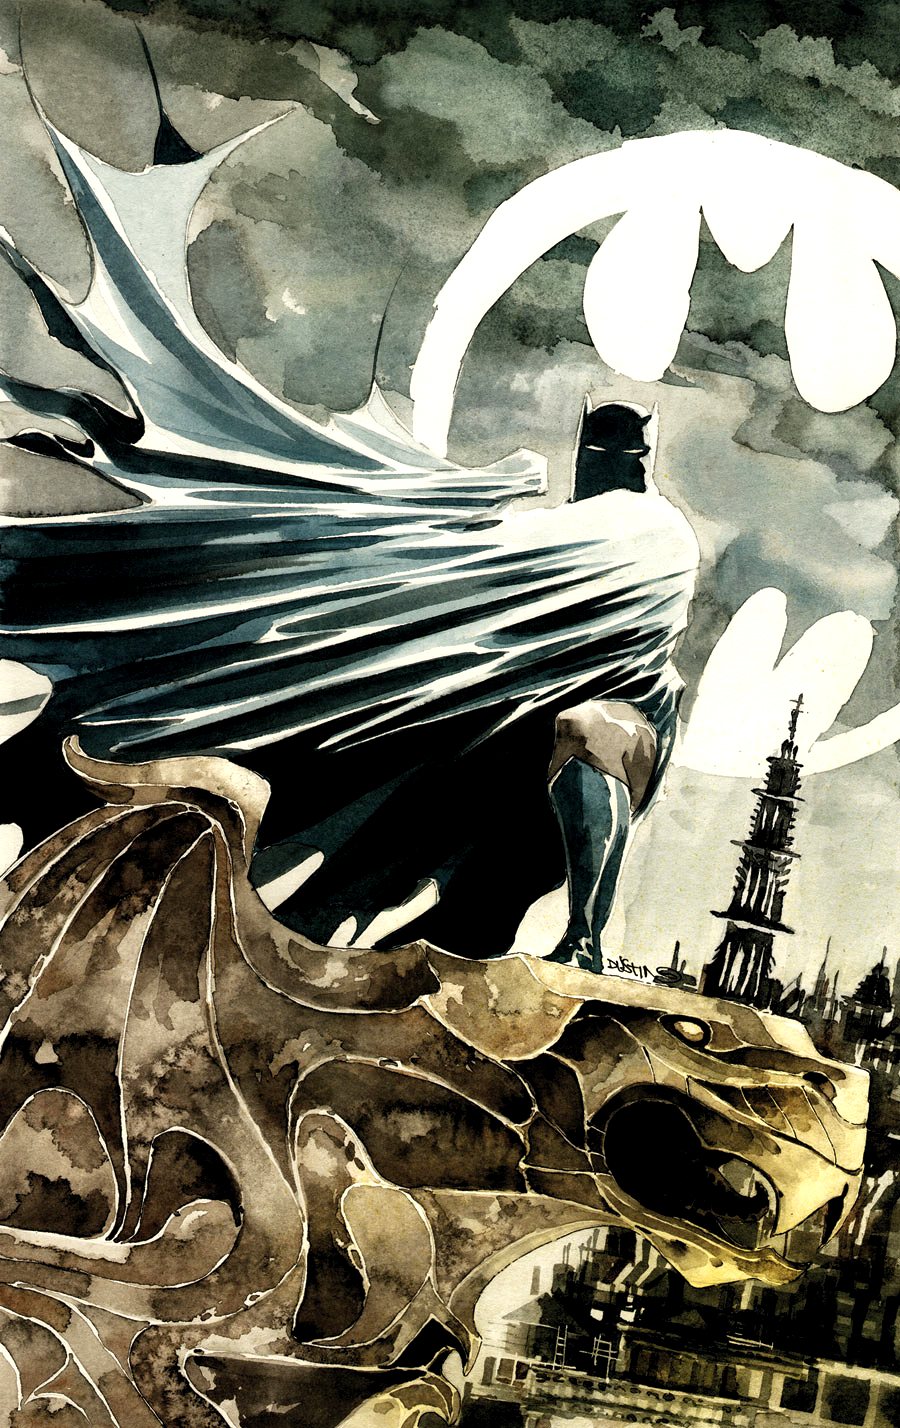 Batman: Streets of Gotham Vol 1 1, DC Database